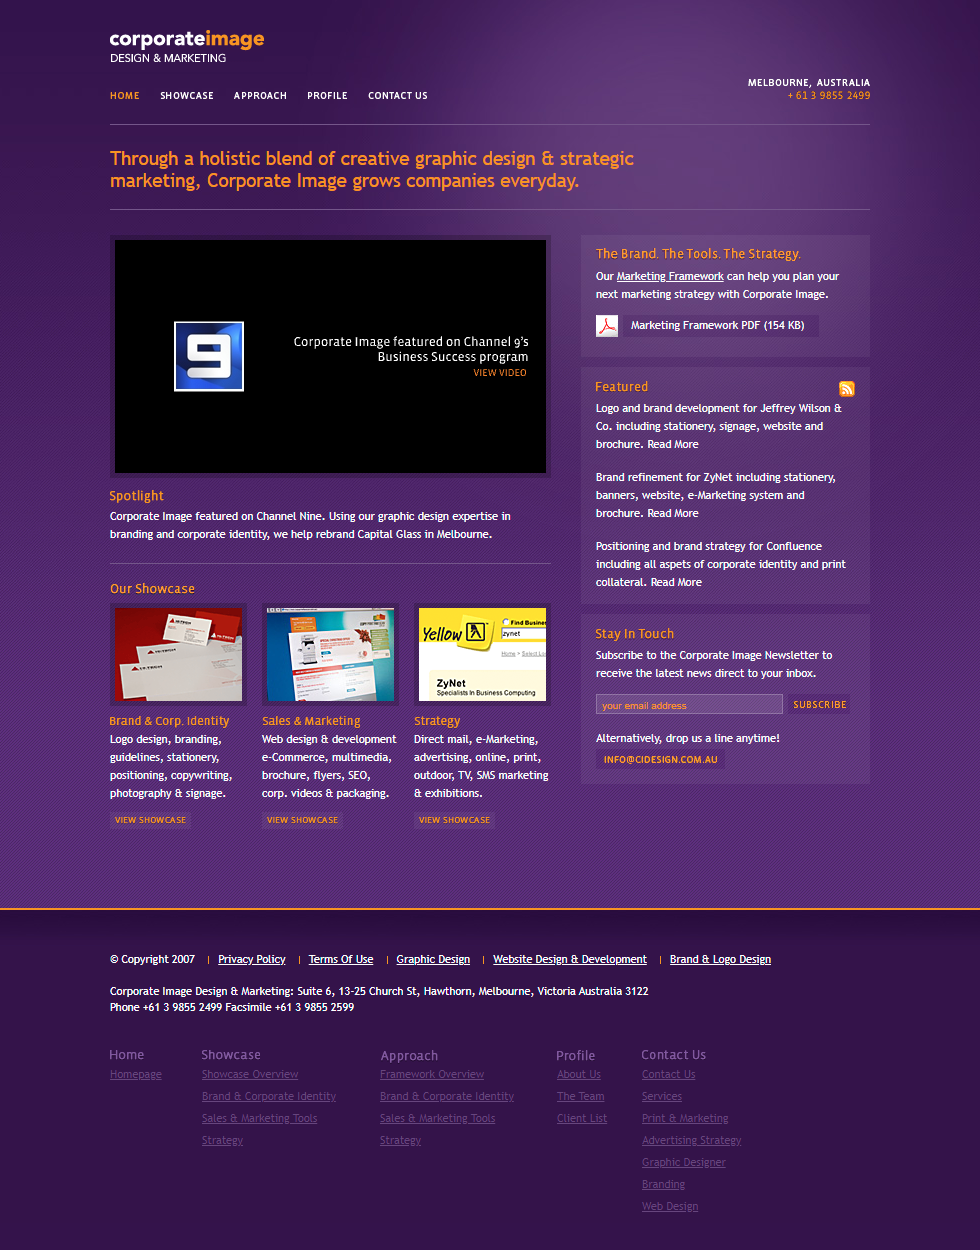 Corporate Image Design & Marketing website in 2007